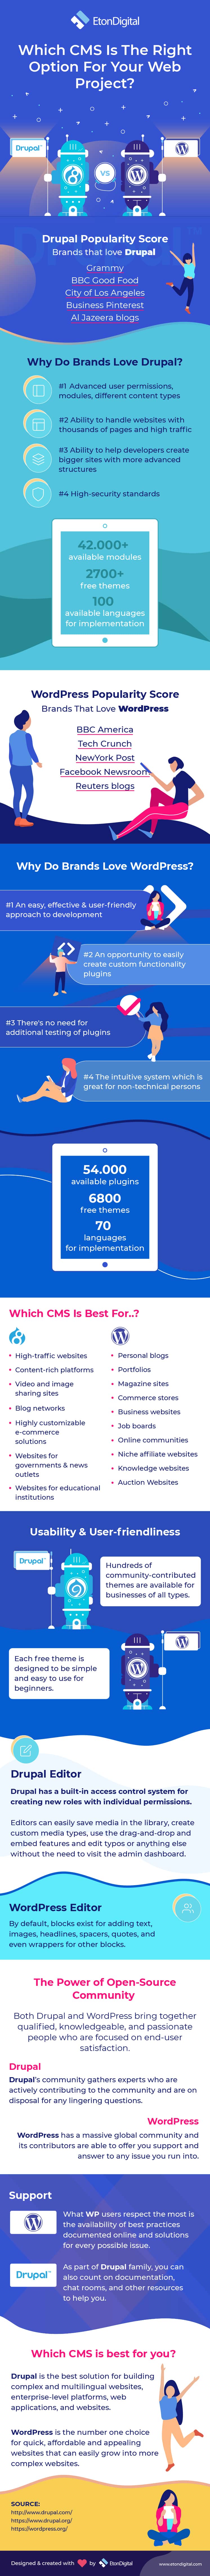 Drupal VS WordPress infographic